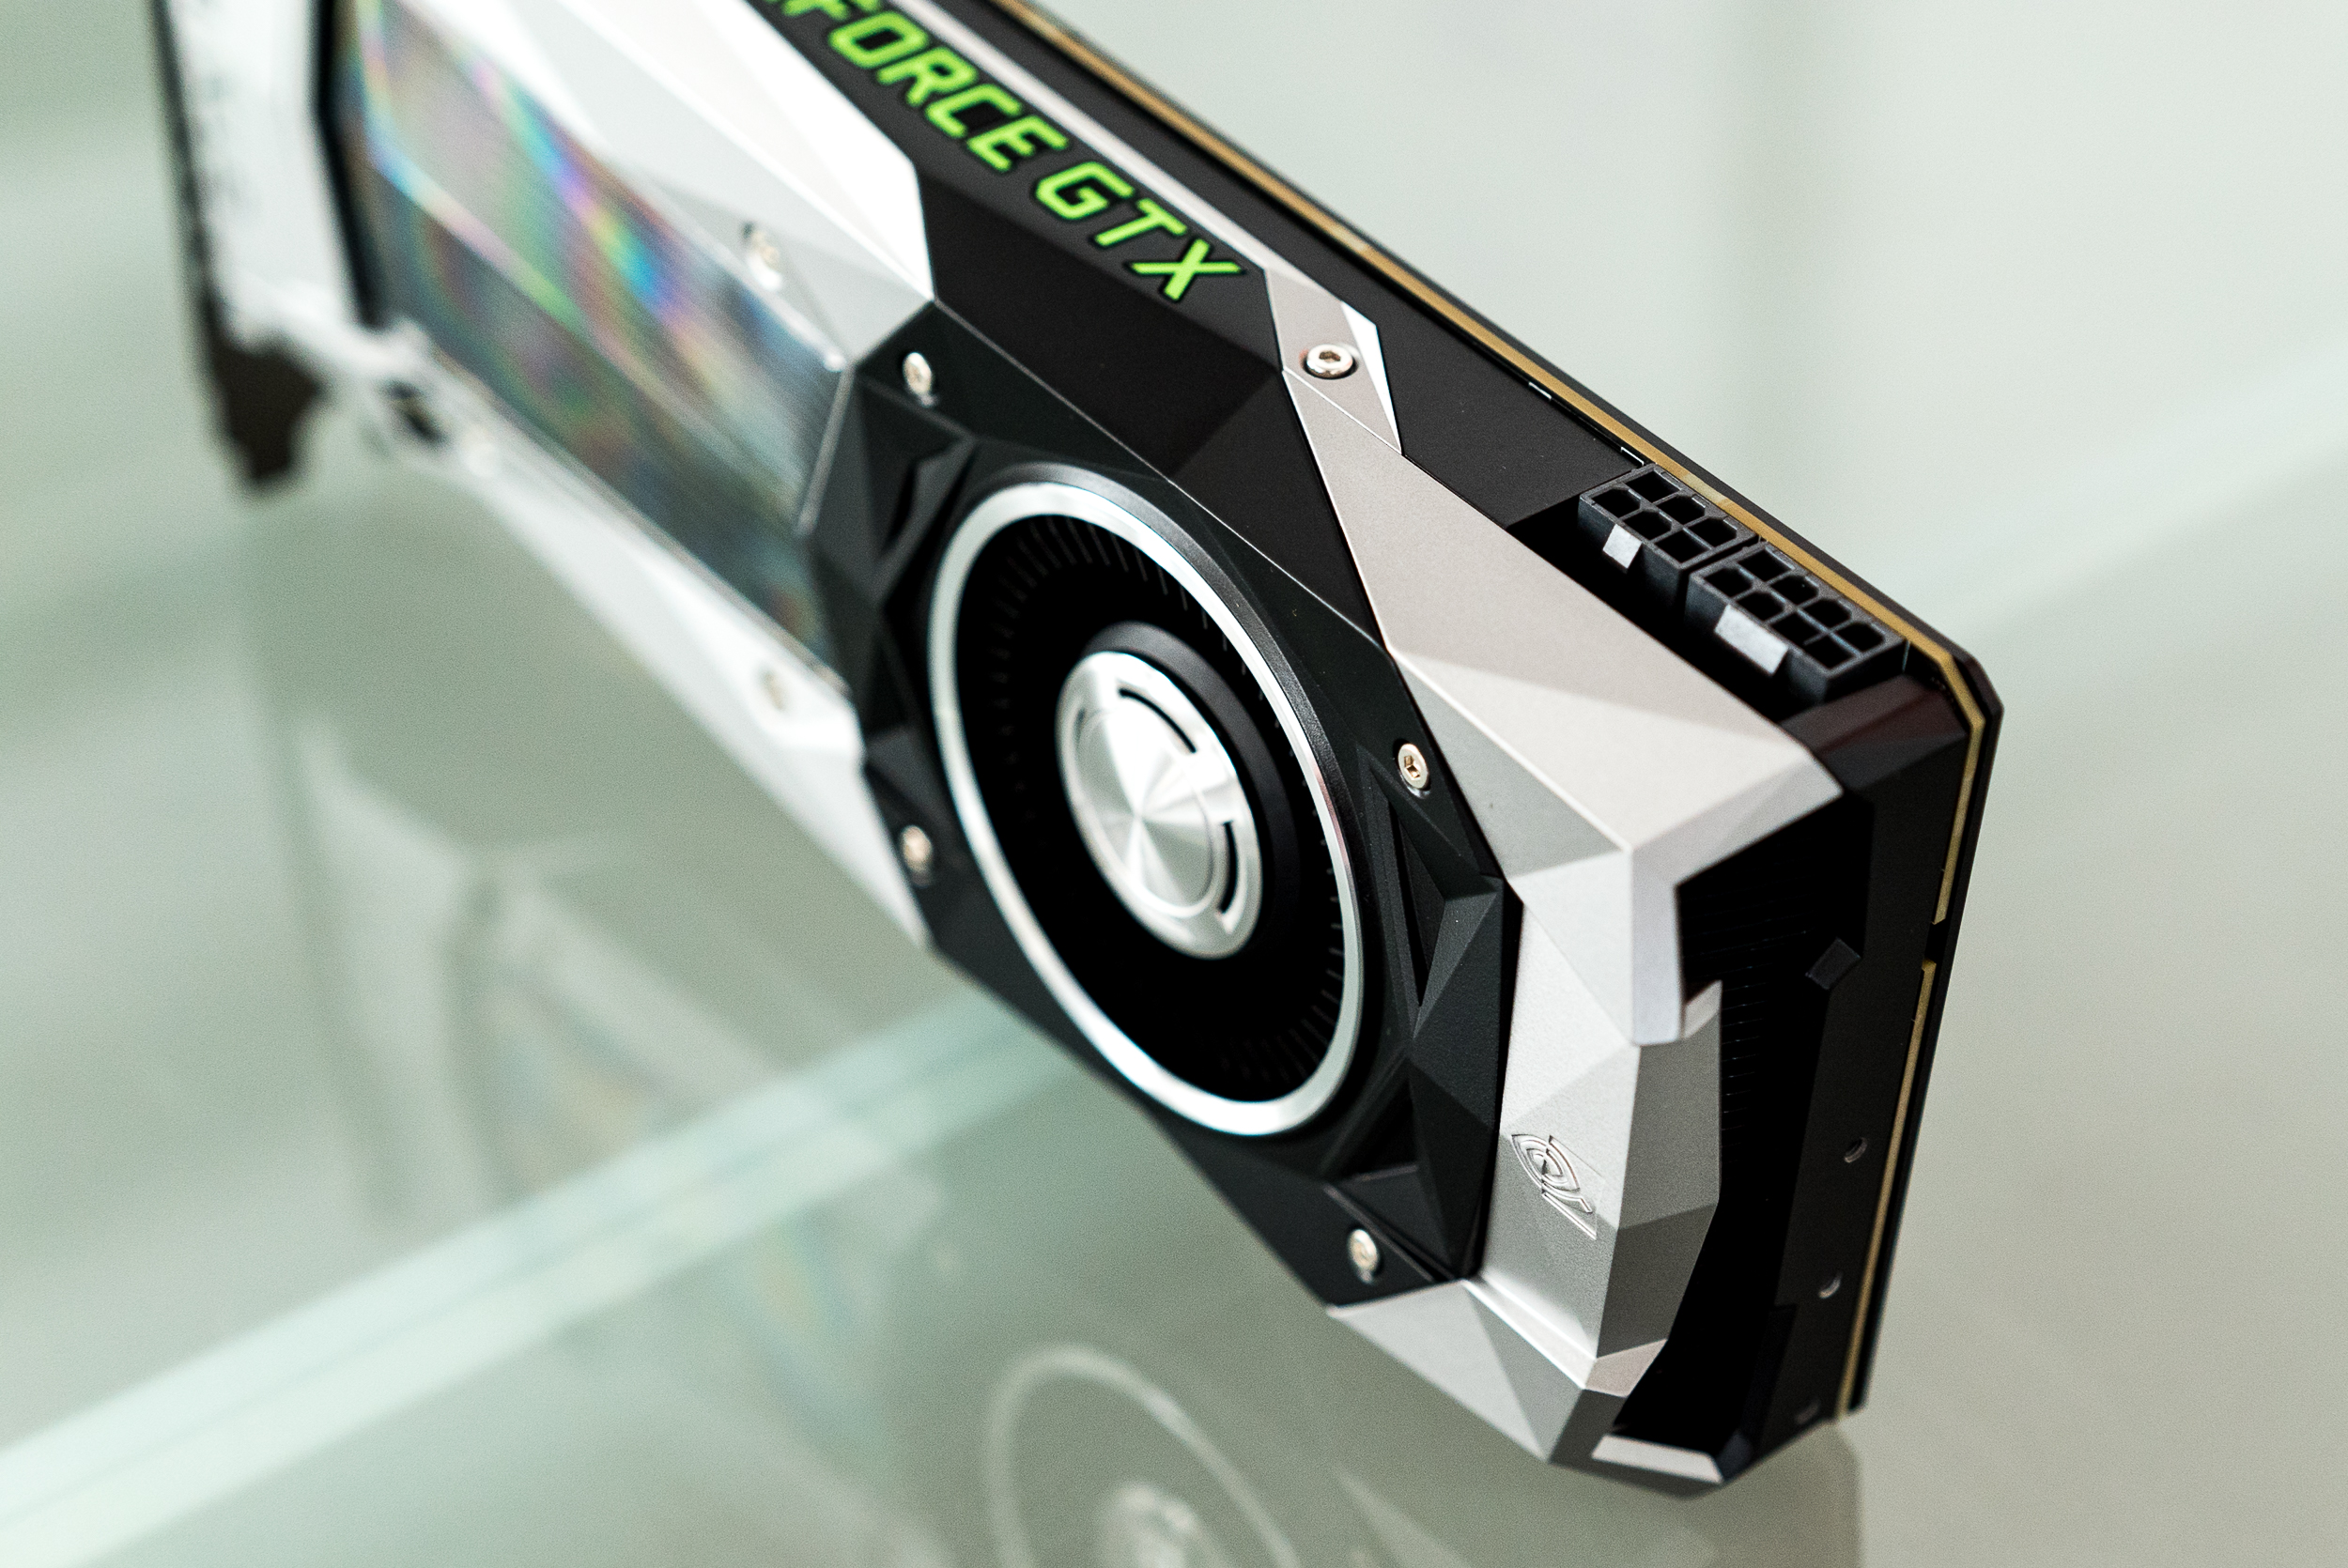 Nvidia GTX 1080 Ti review: The fastest graphics card, again